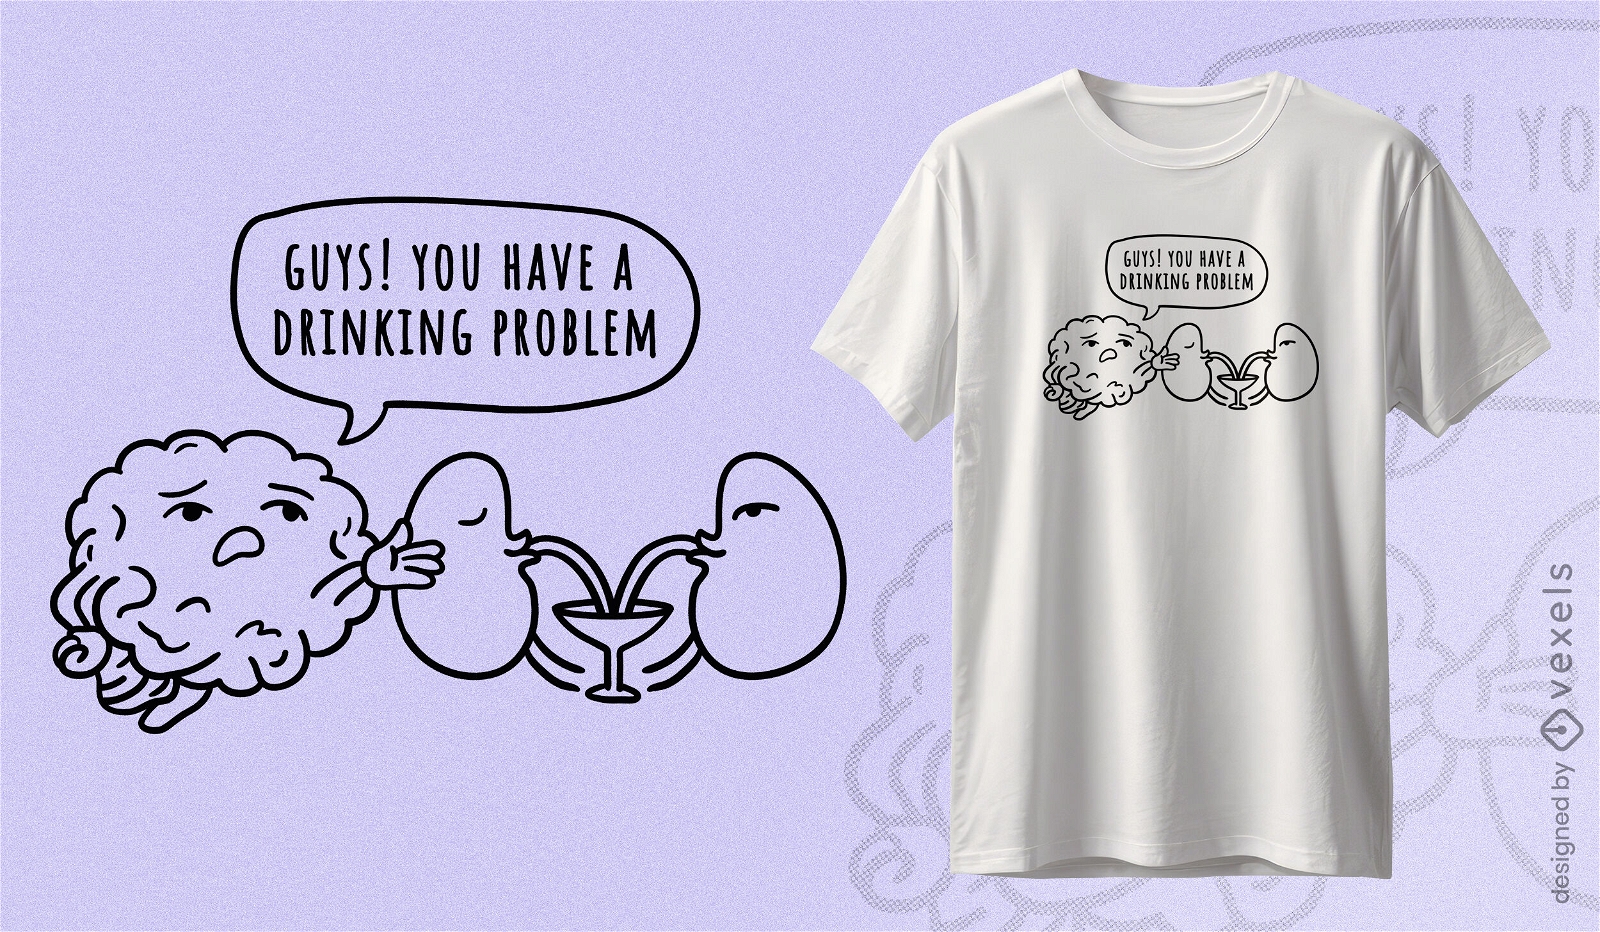 Drinking problem bubble t-shirt design